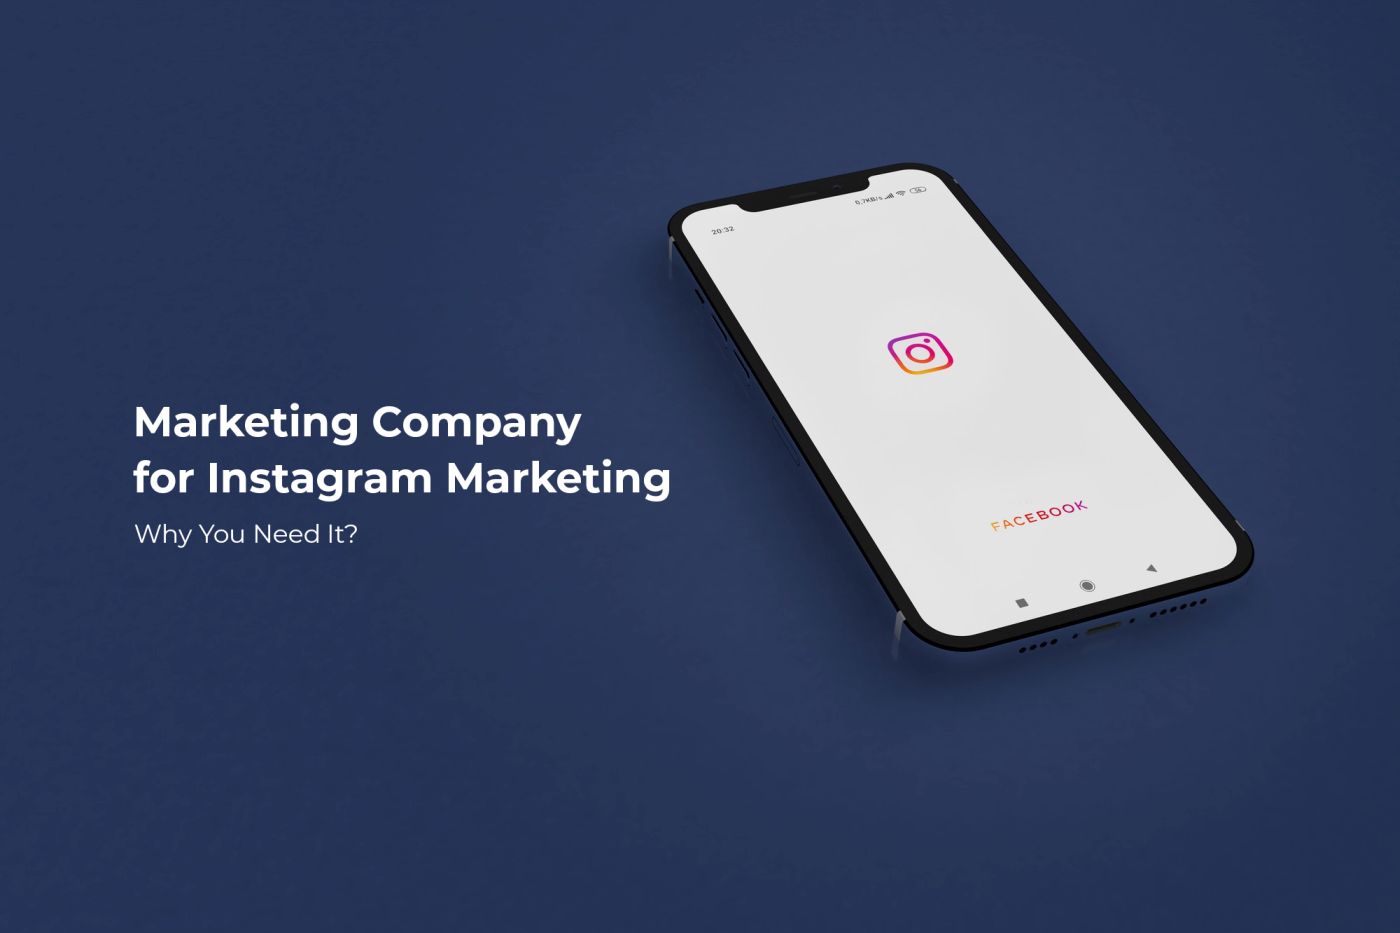 Marketing company for Instagram marketing